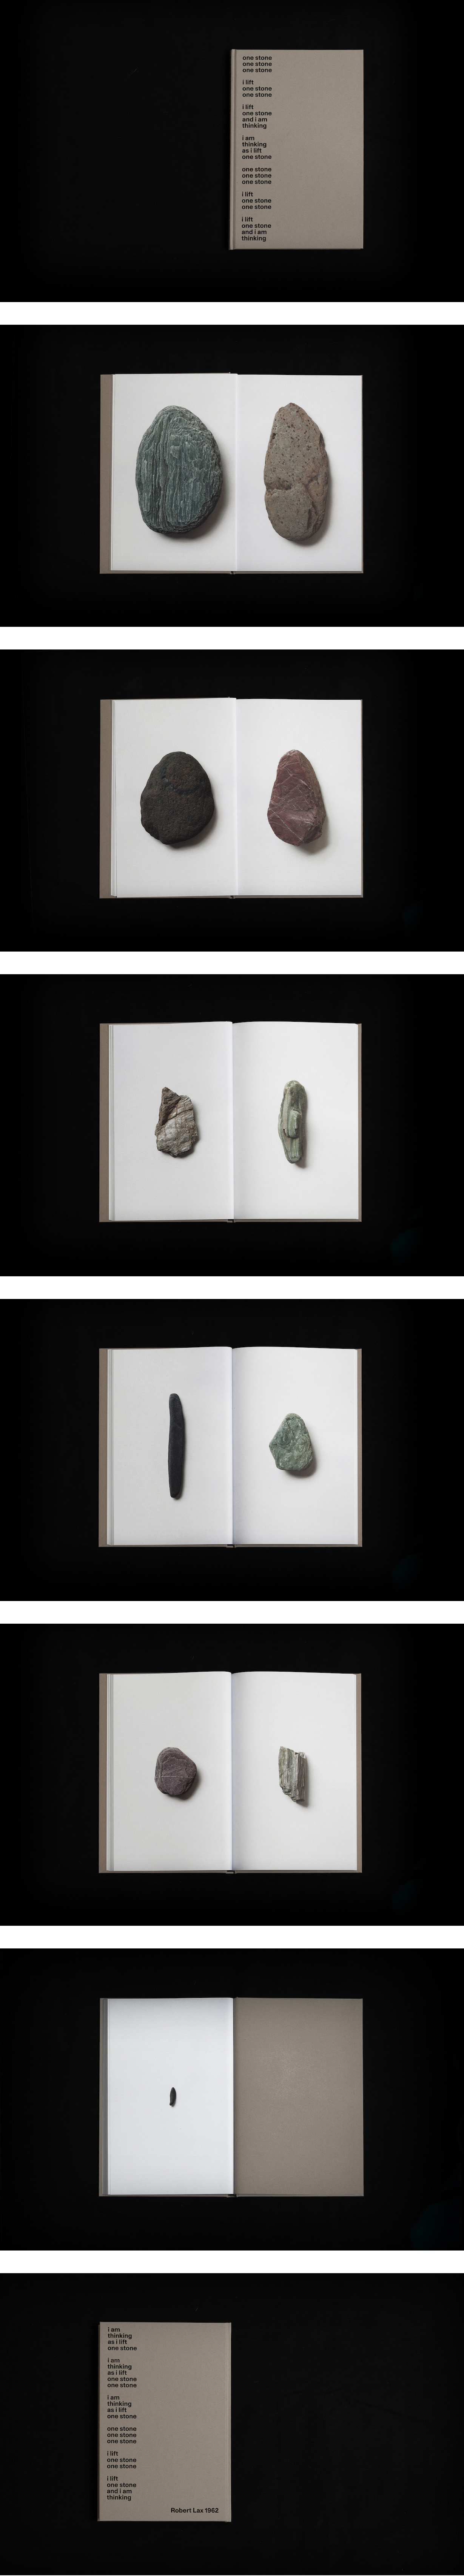 88 stones, Edition Taube